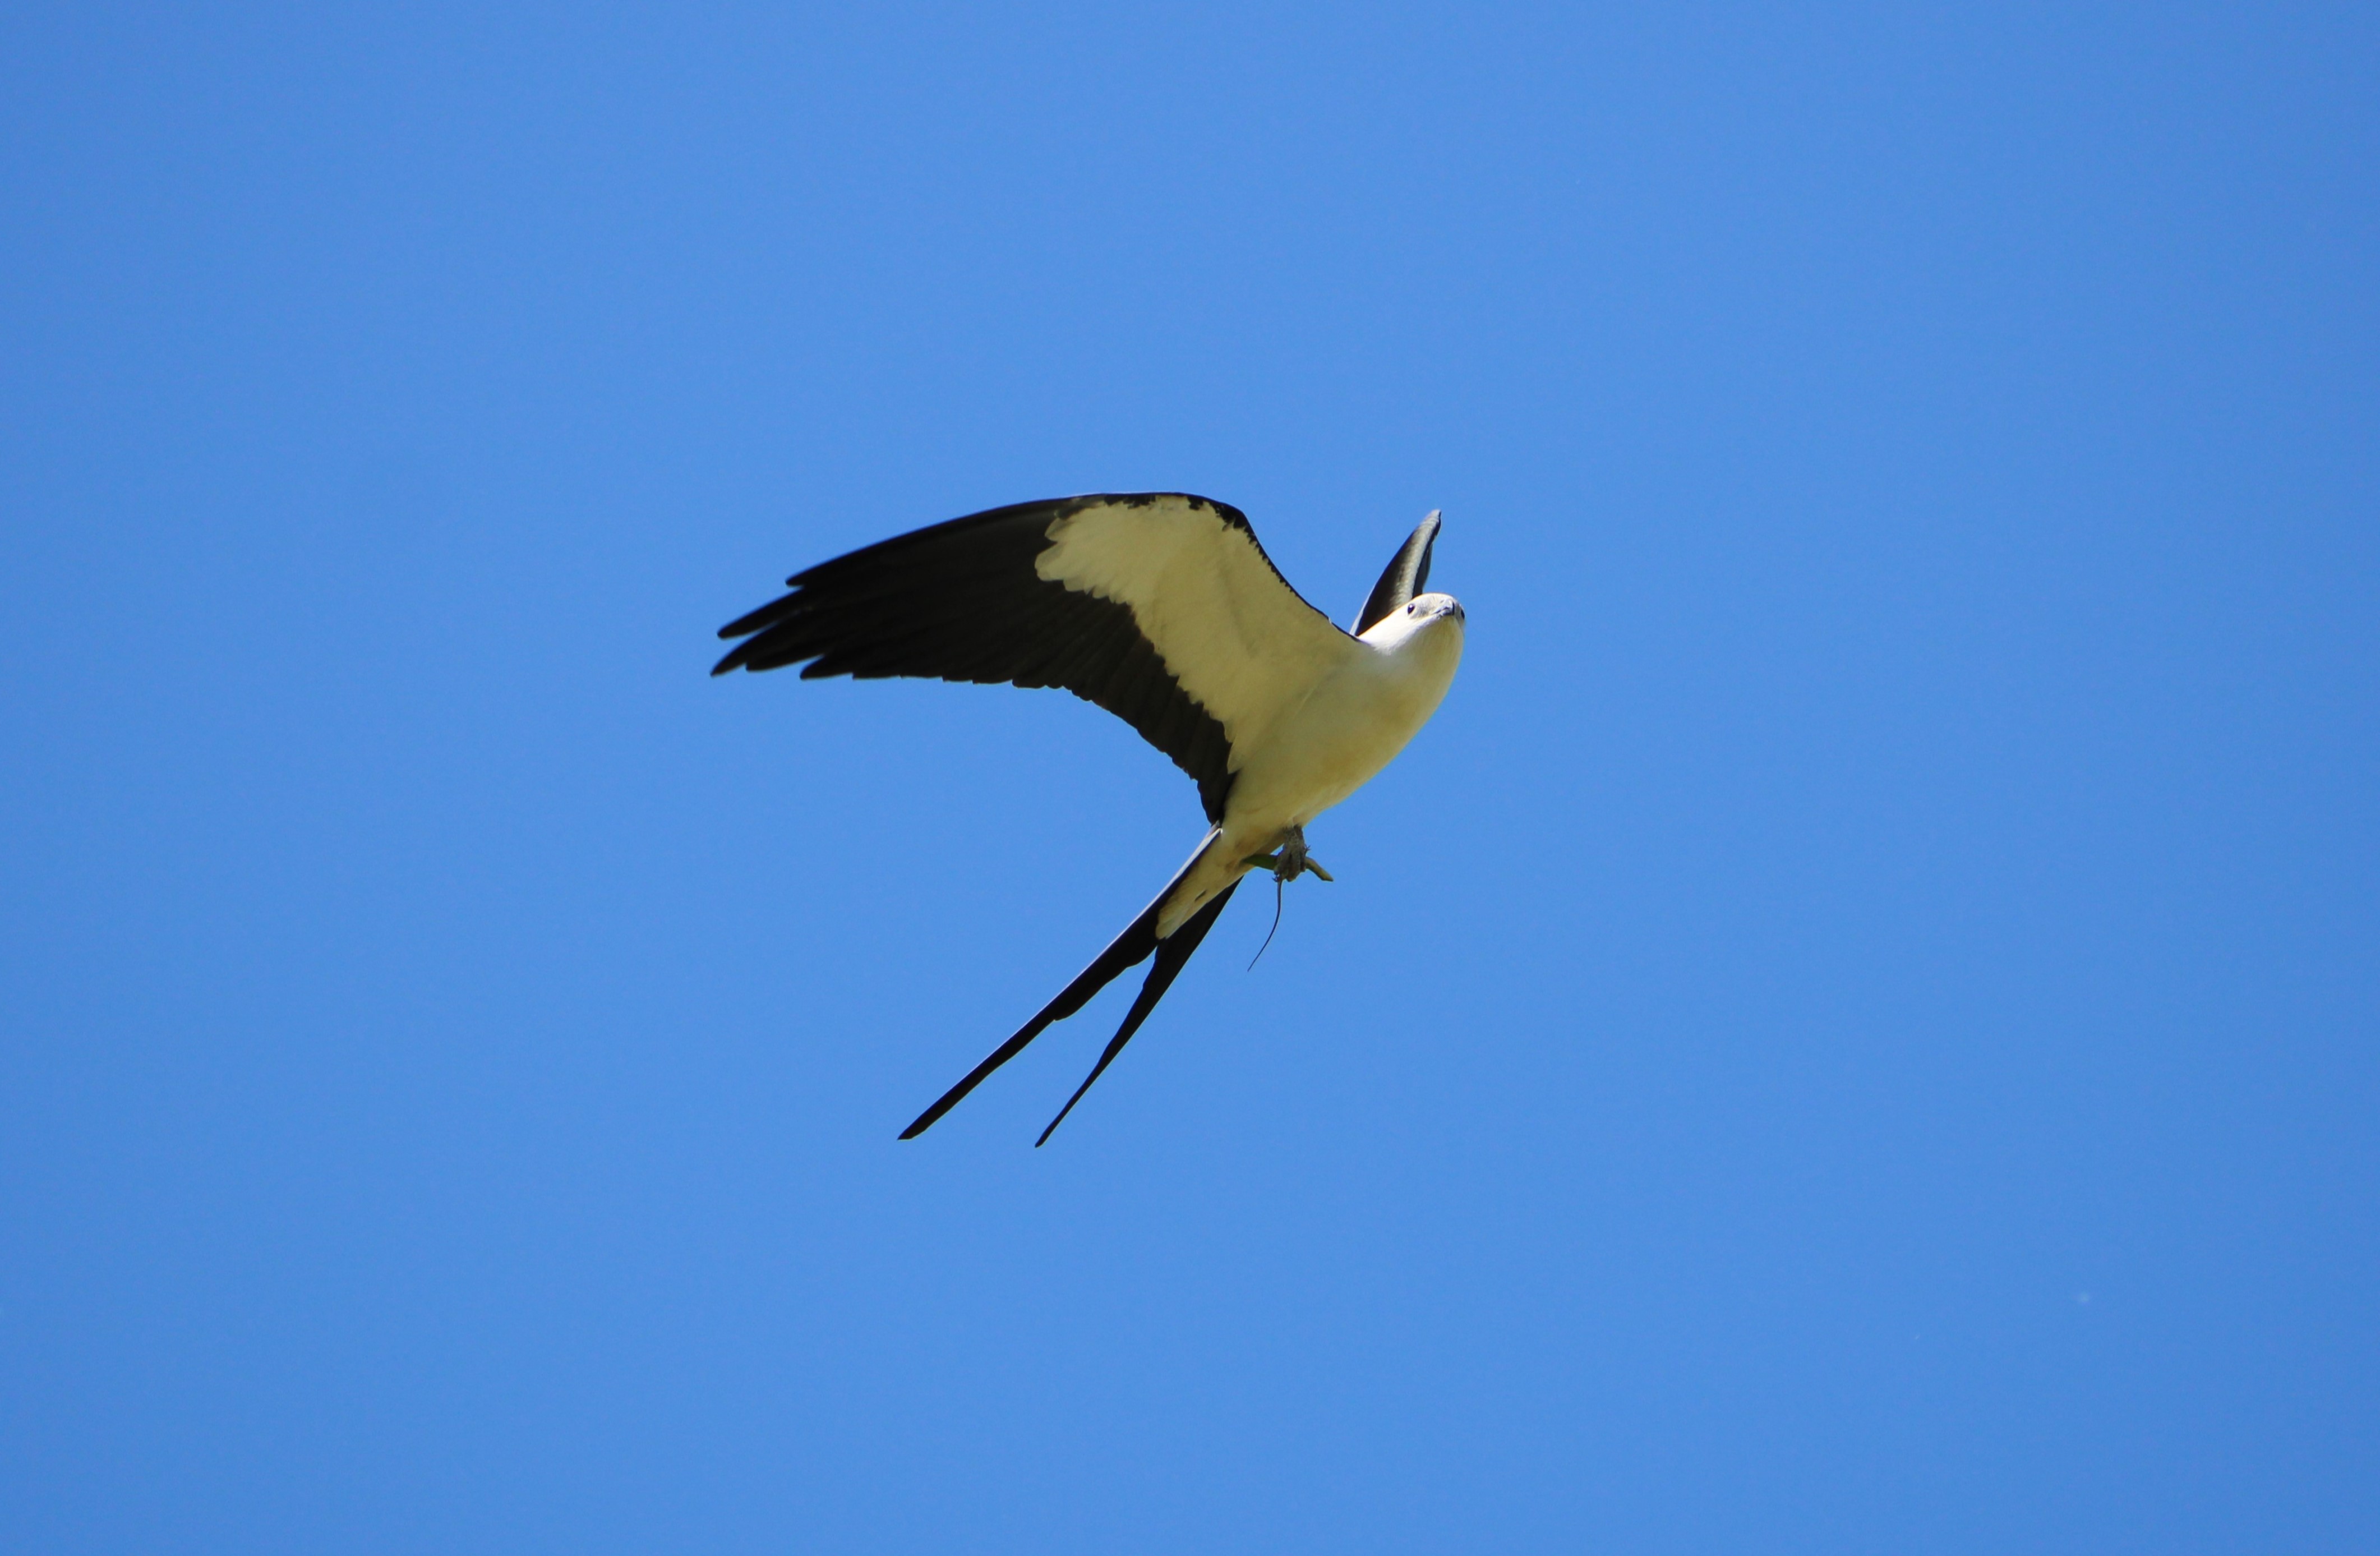 A bird of prey in flight with a lizard in its talons.